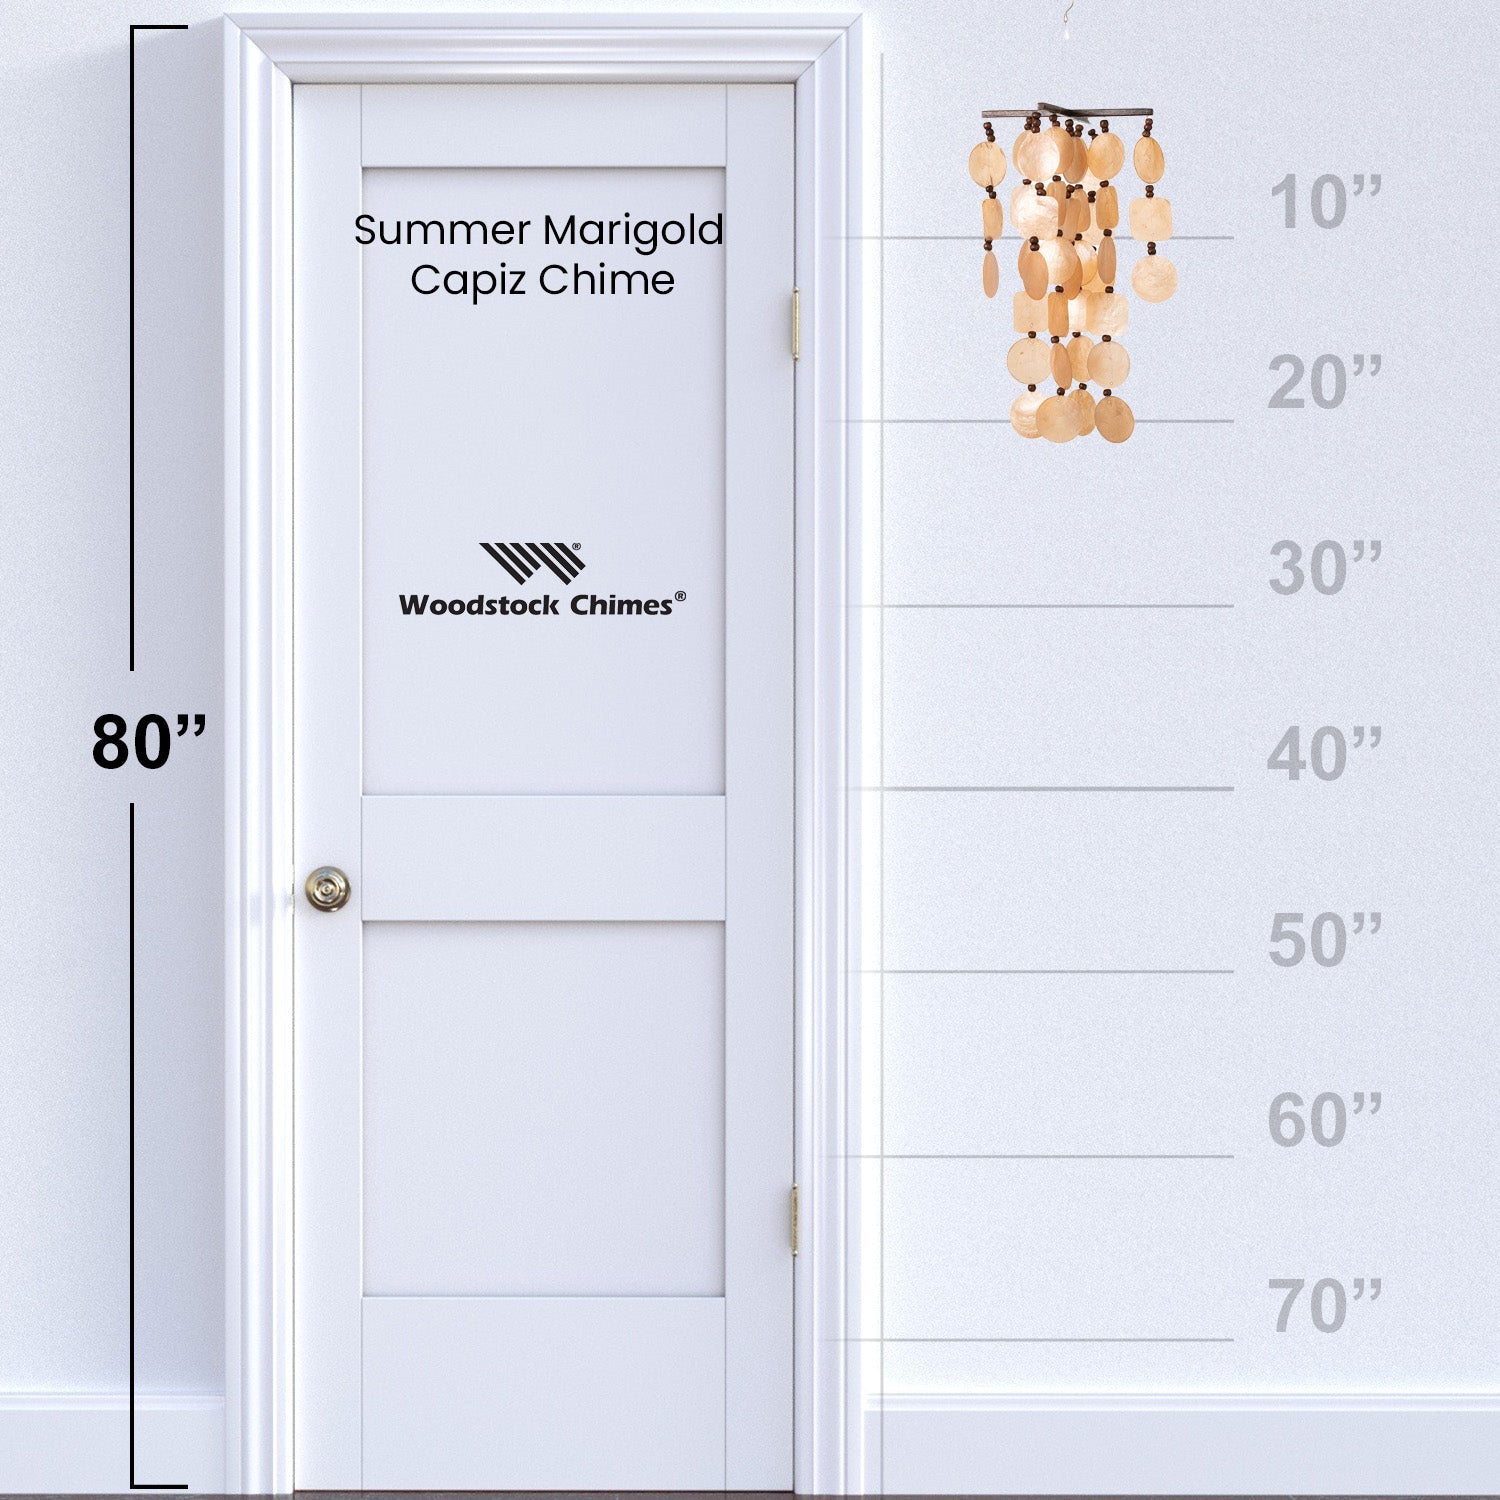 Summer Marigold Capiz Chime proportion image